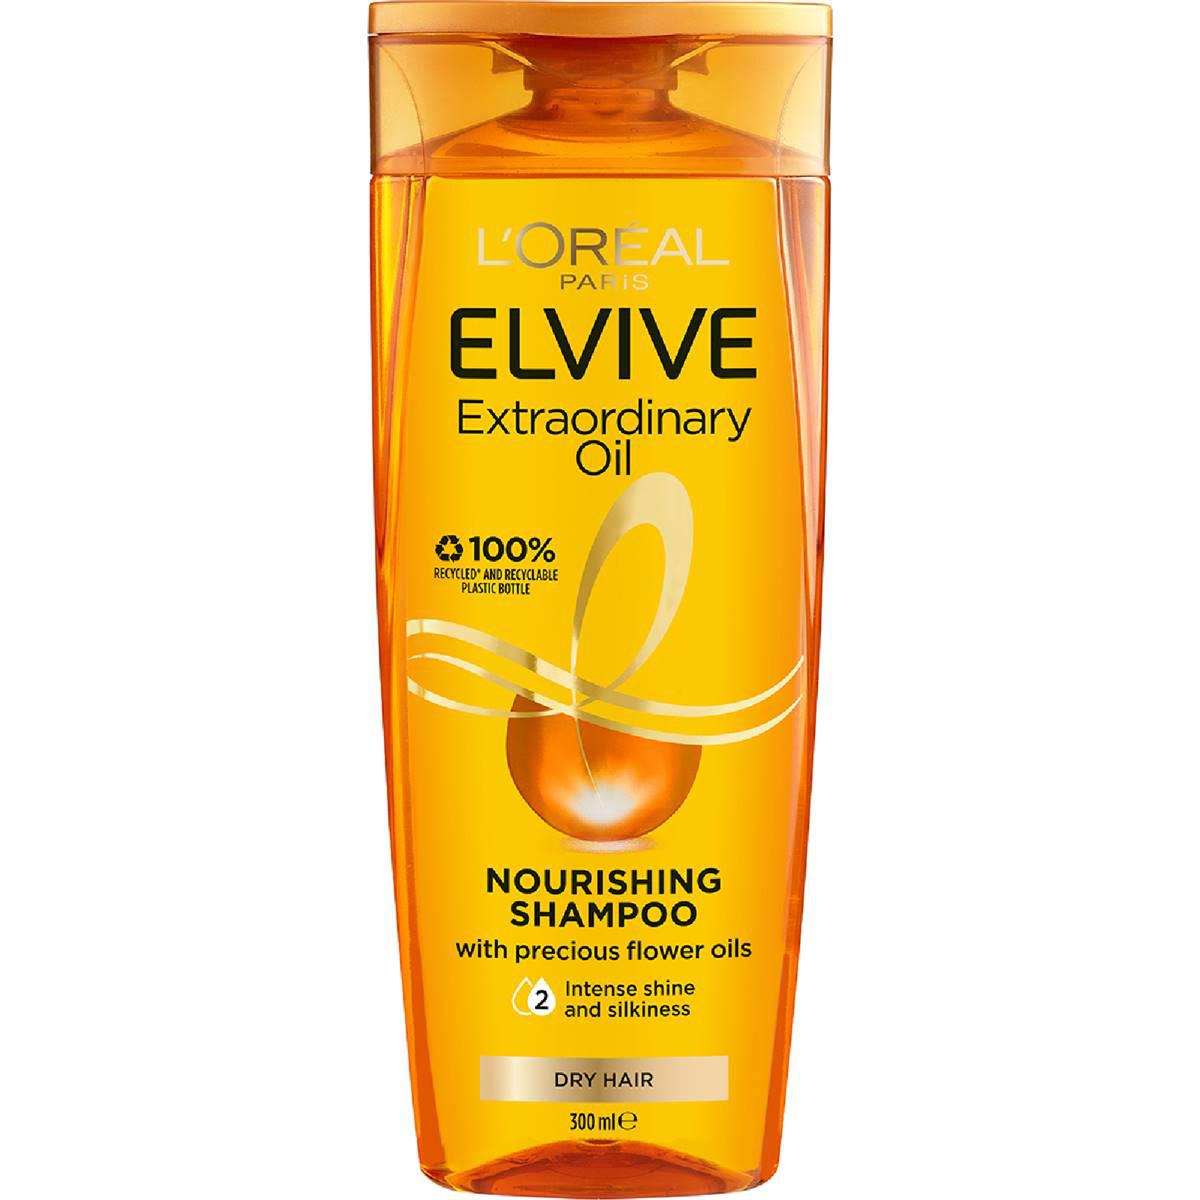 L'oreal Elvive Extraordinary Oil Shampoo 300ml